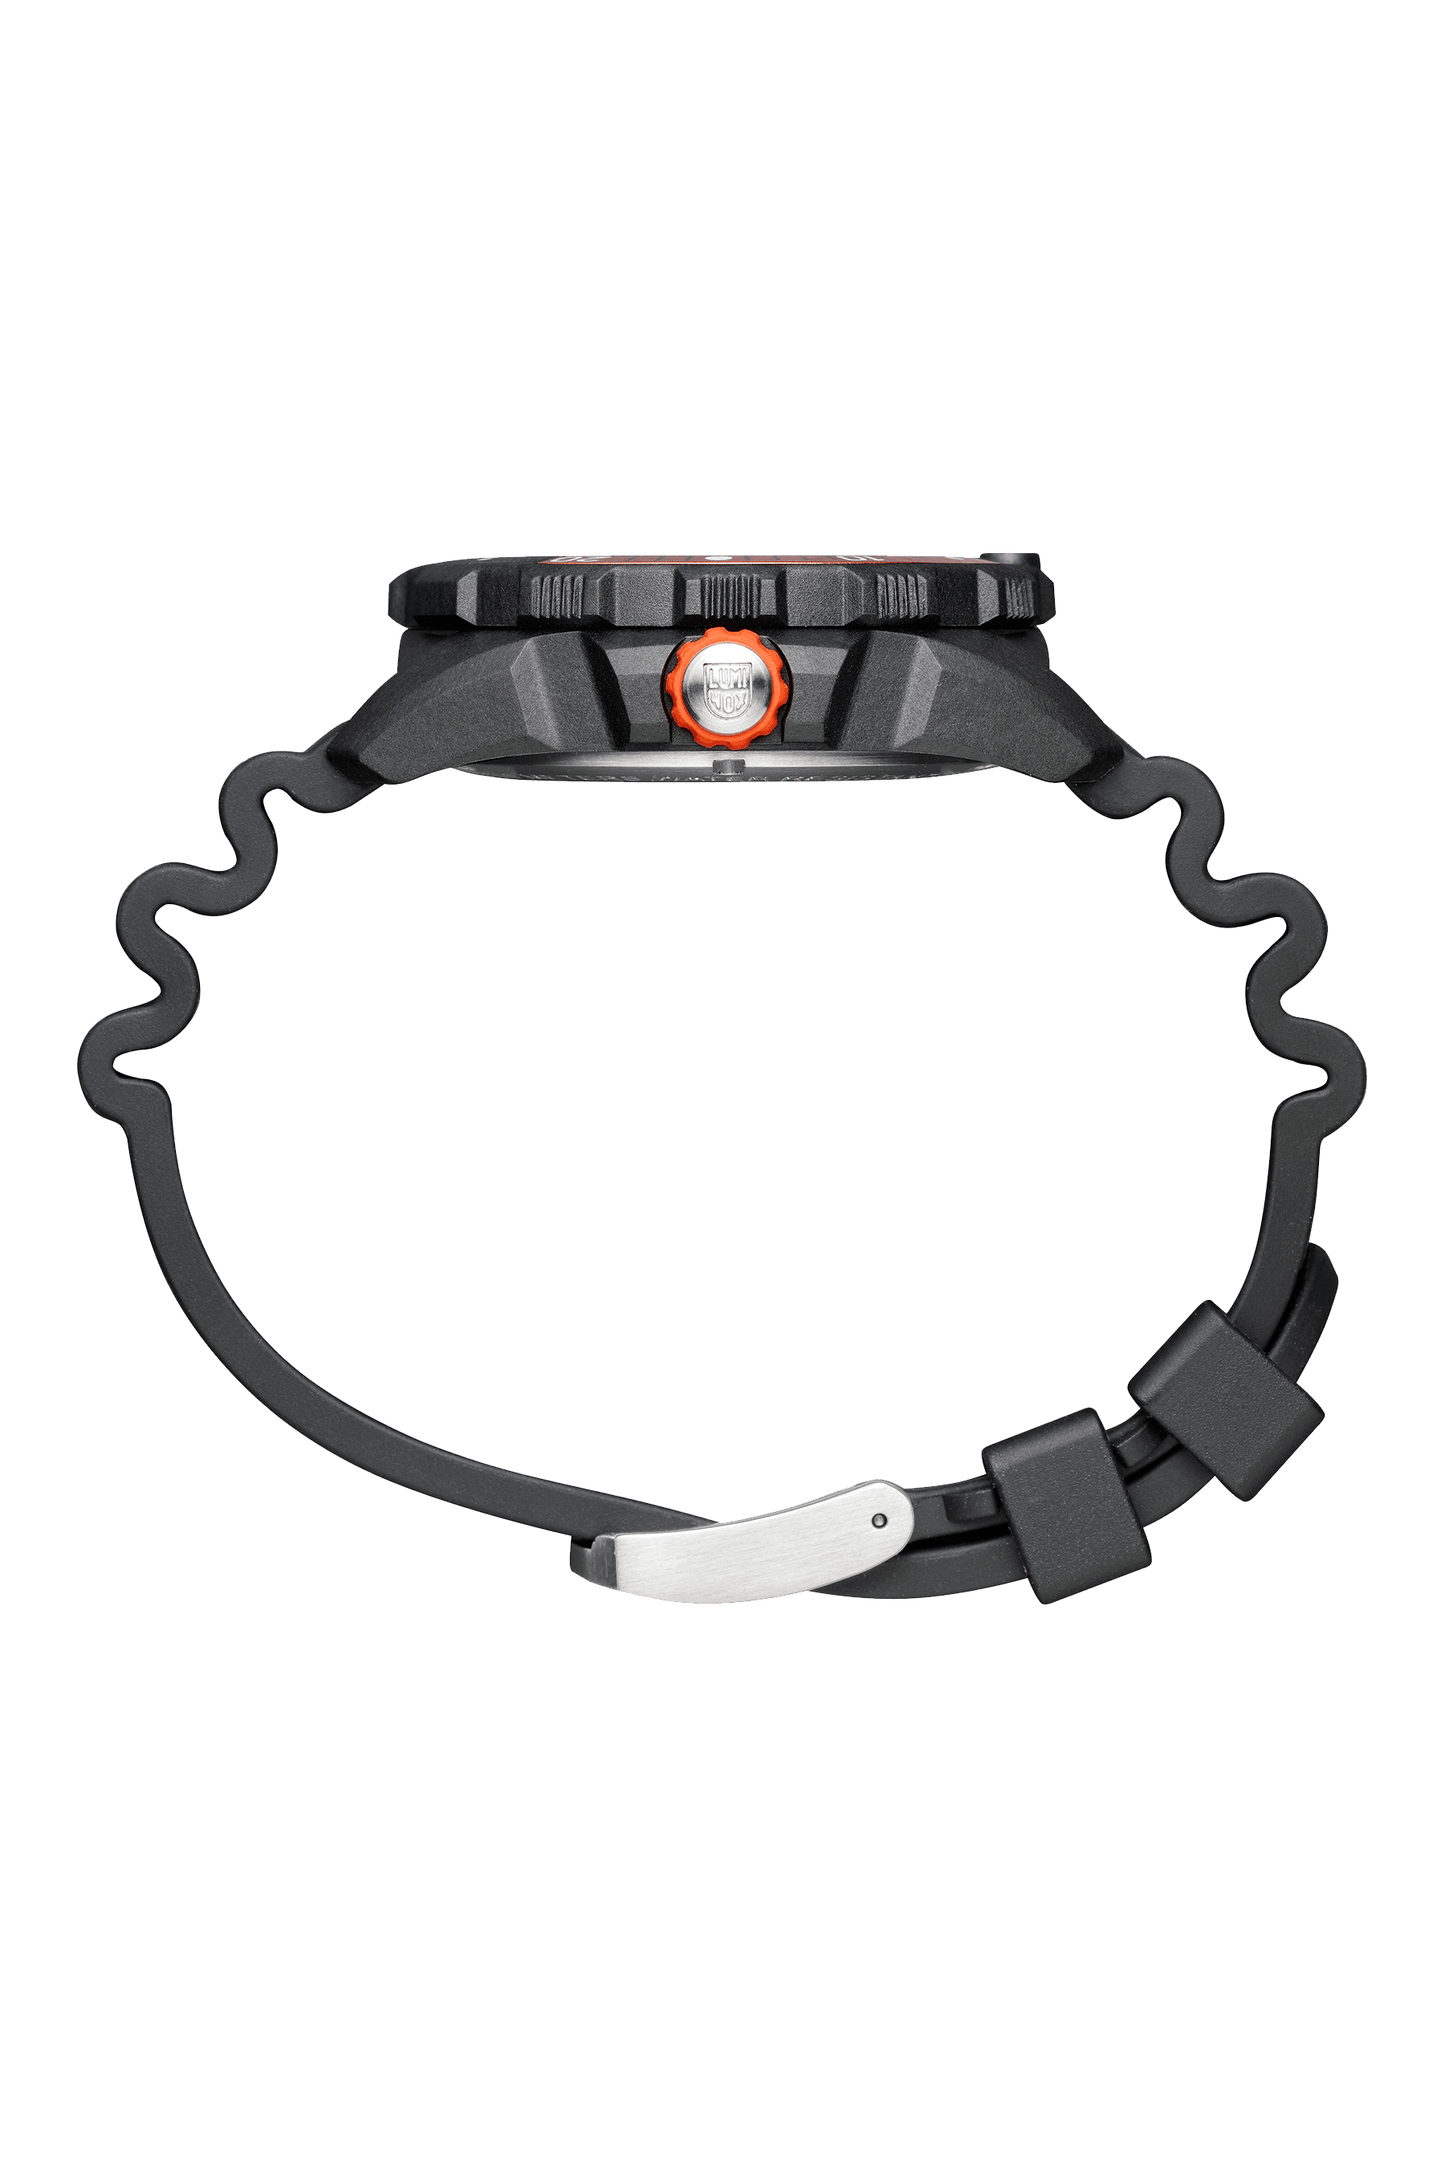 Bear Grylls Survival, 42 mm, Outdoor Explorer Watch - 3729